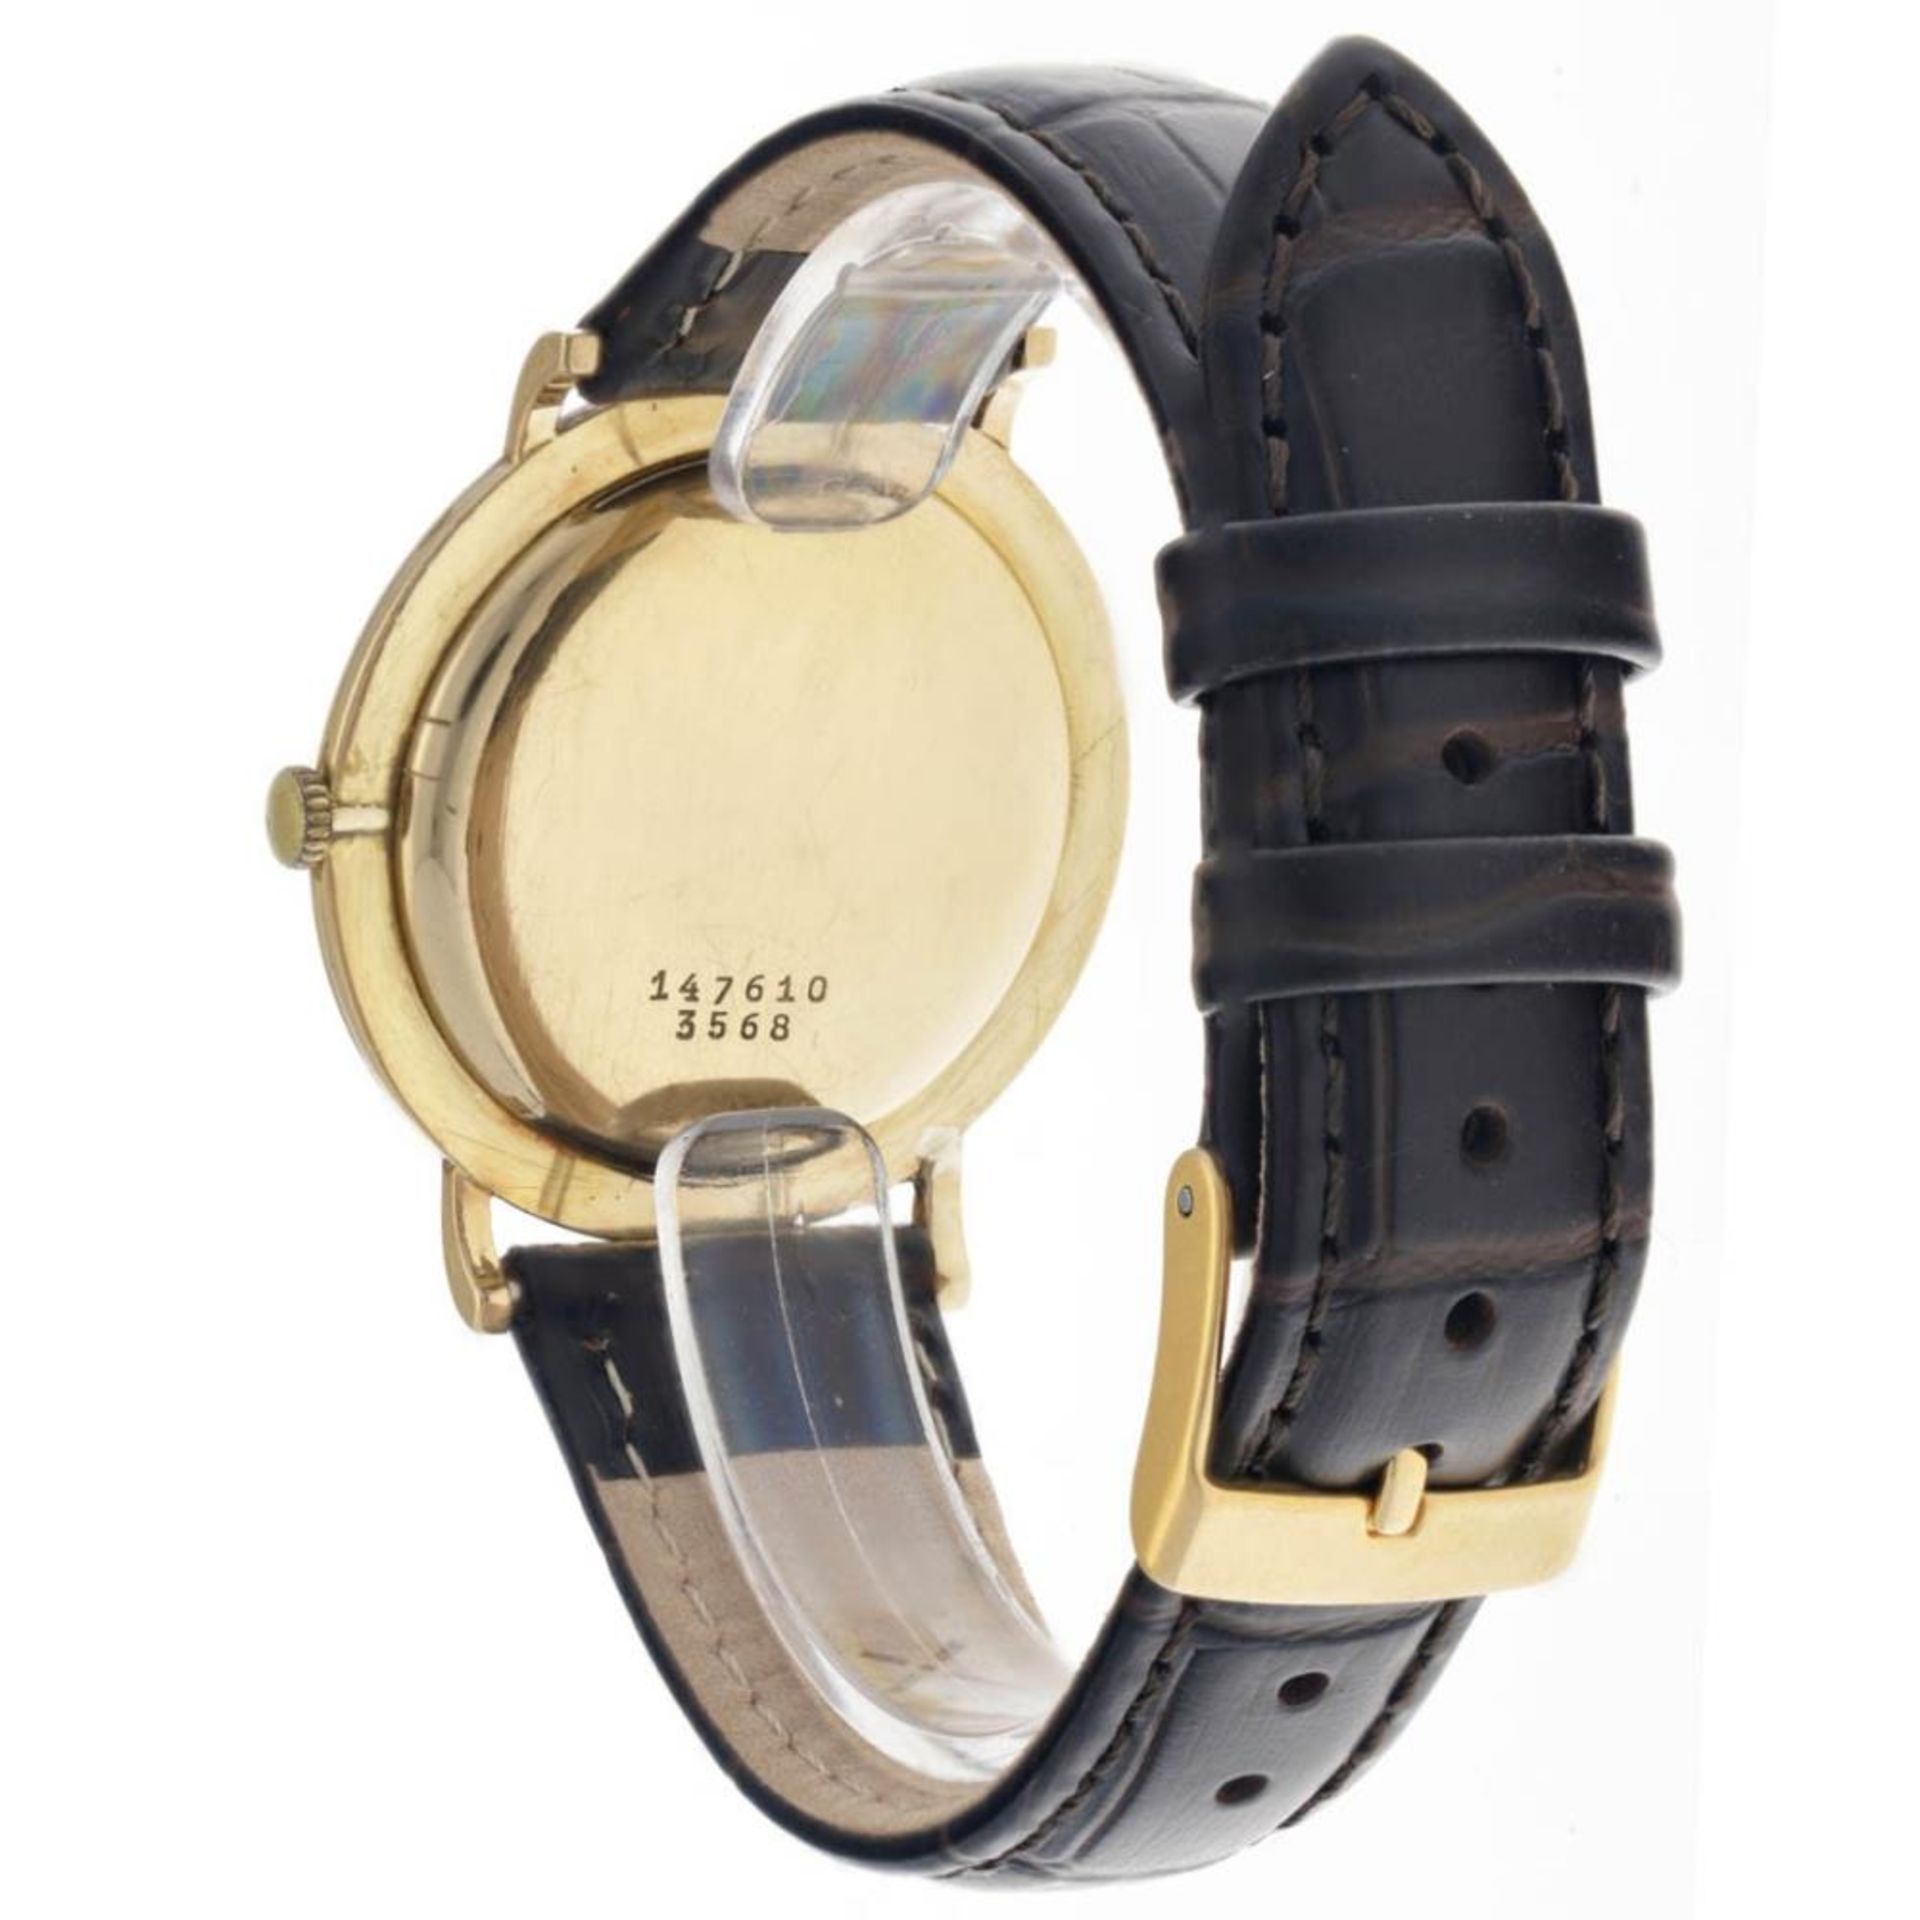 Baume & Mercier vintage 3568 - Men's watch - approx. 1950. - Image 5 of 12